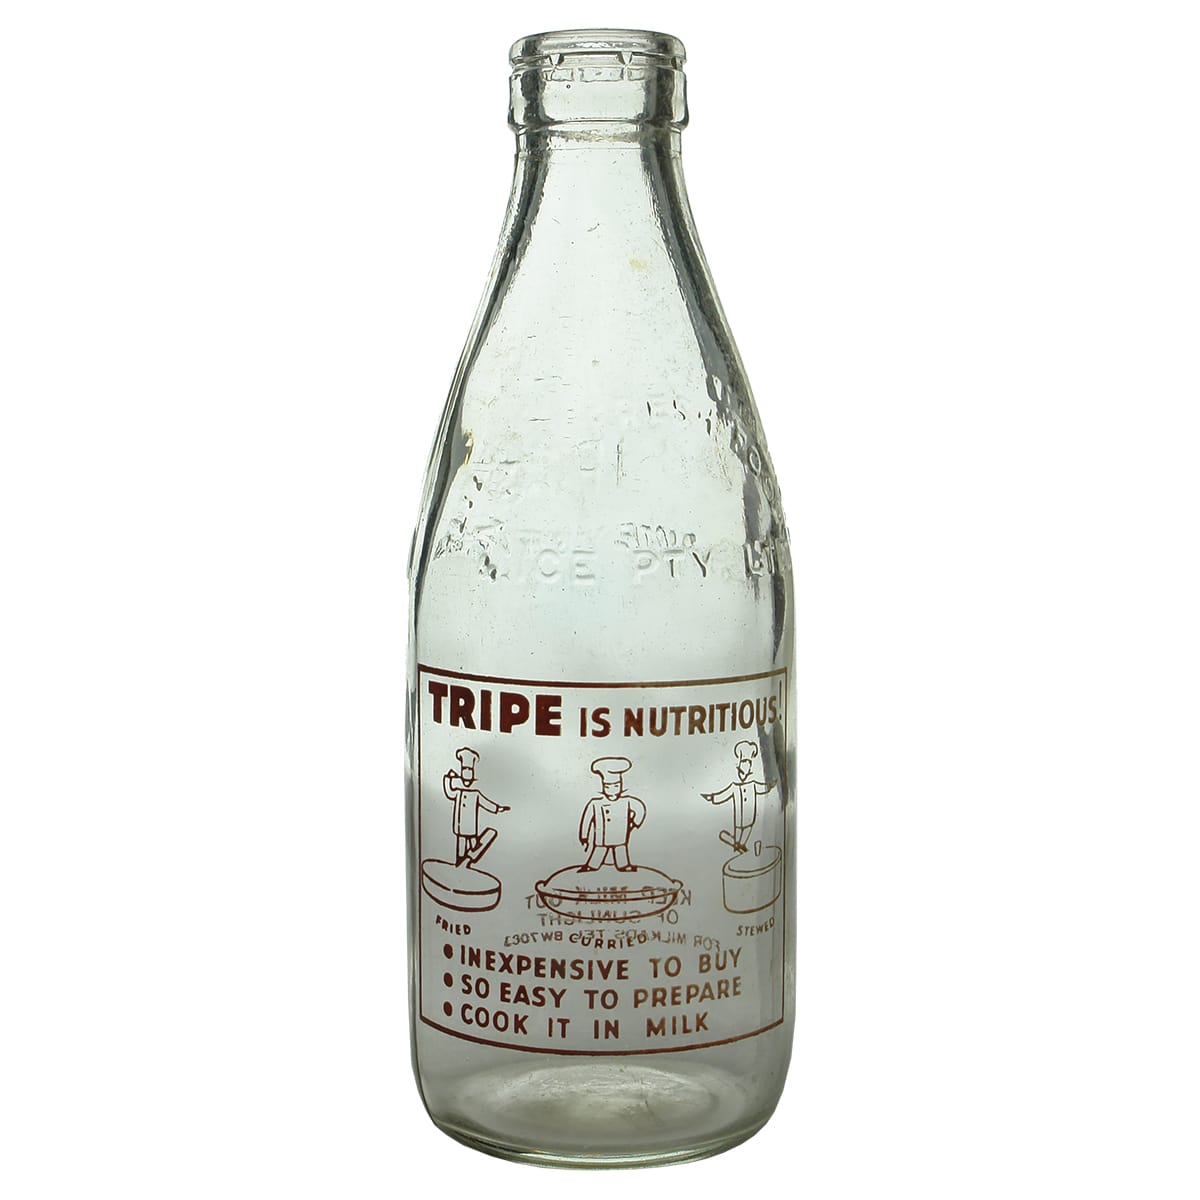 Milk. NSW Fresh Food & Ice Pty Ltd. Ceramic label advertising Tripe. 1 Pint.